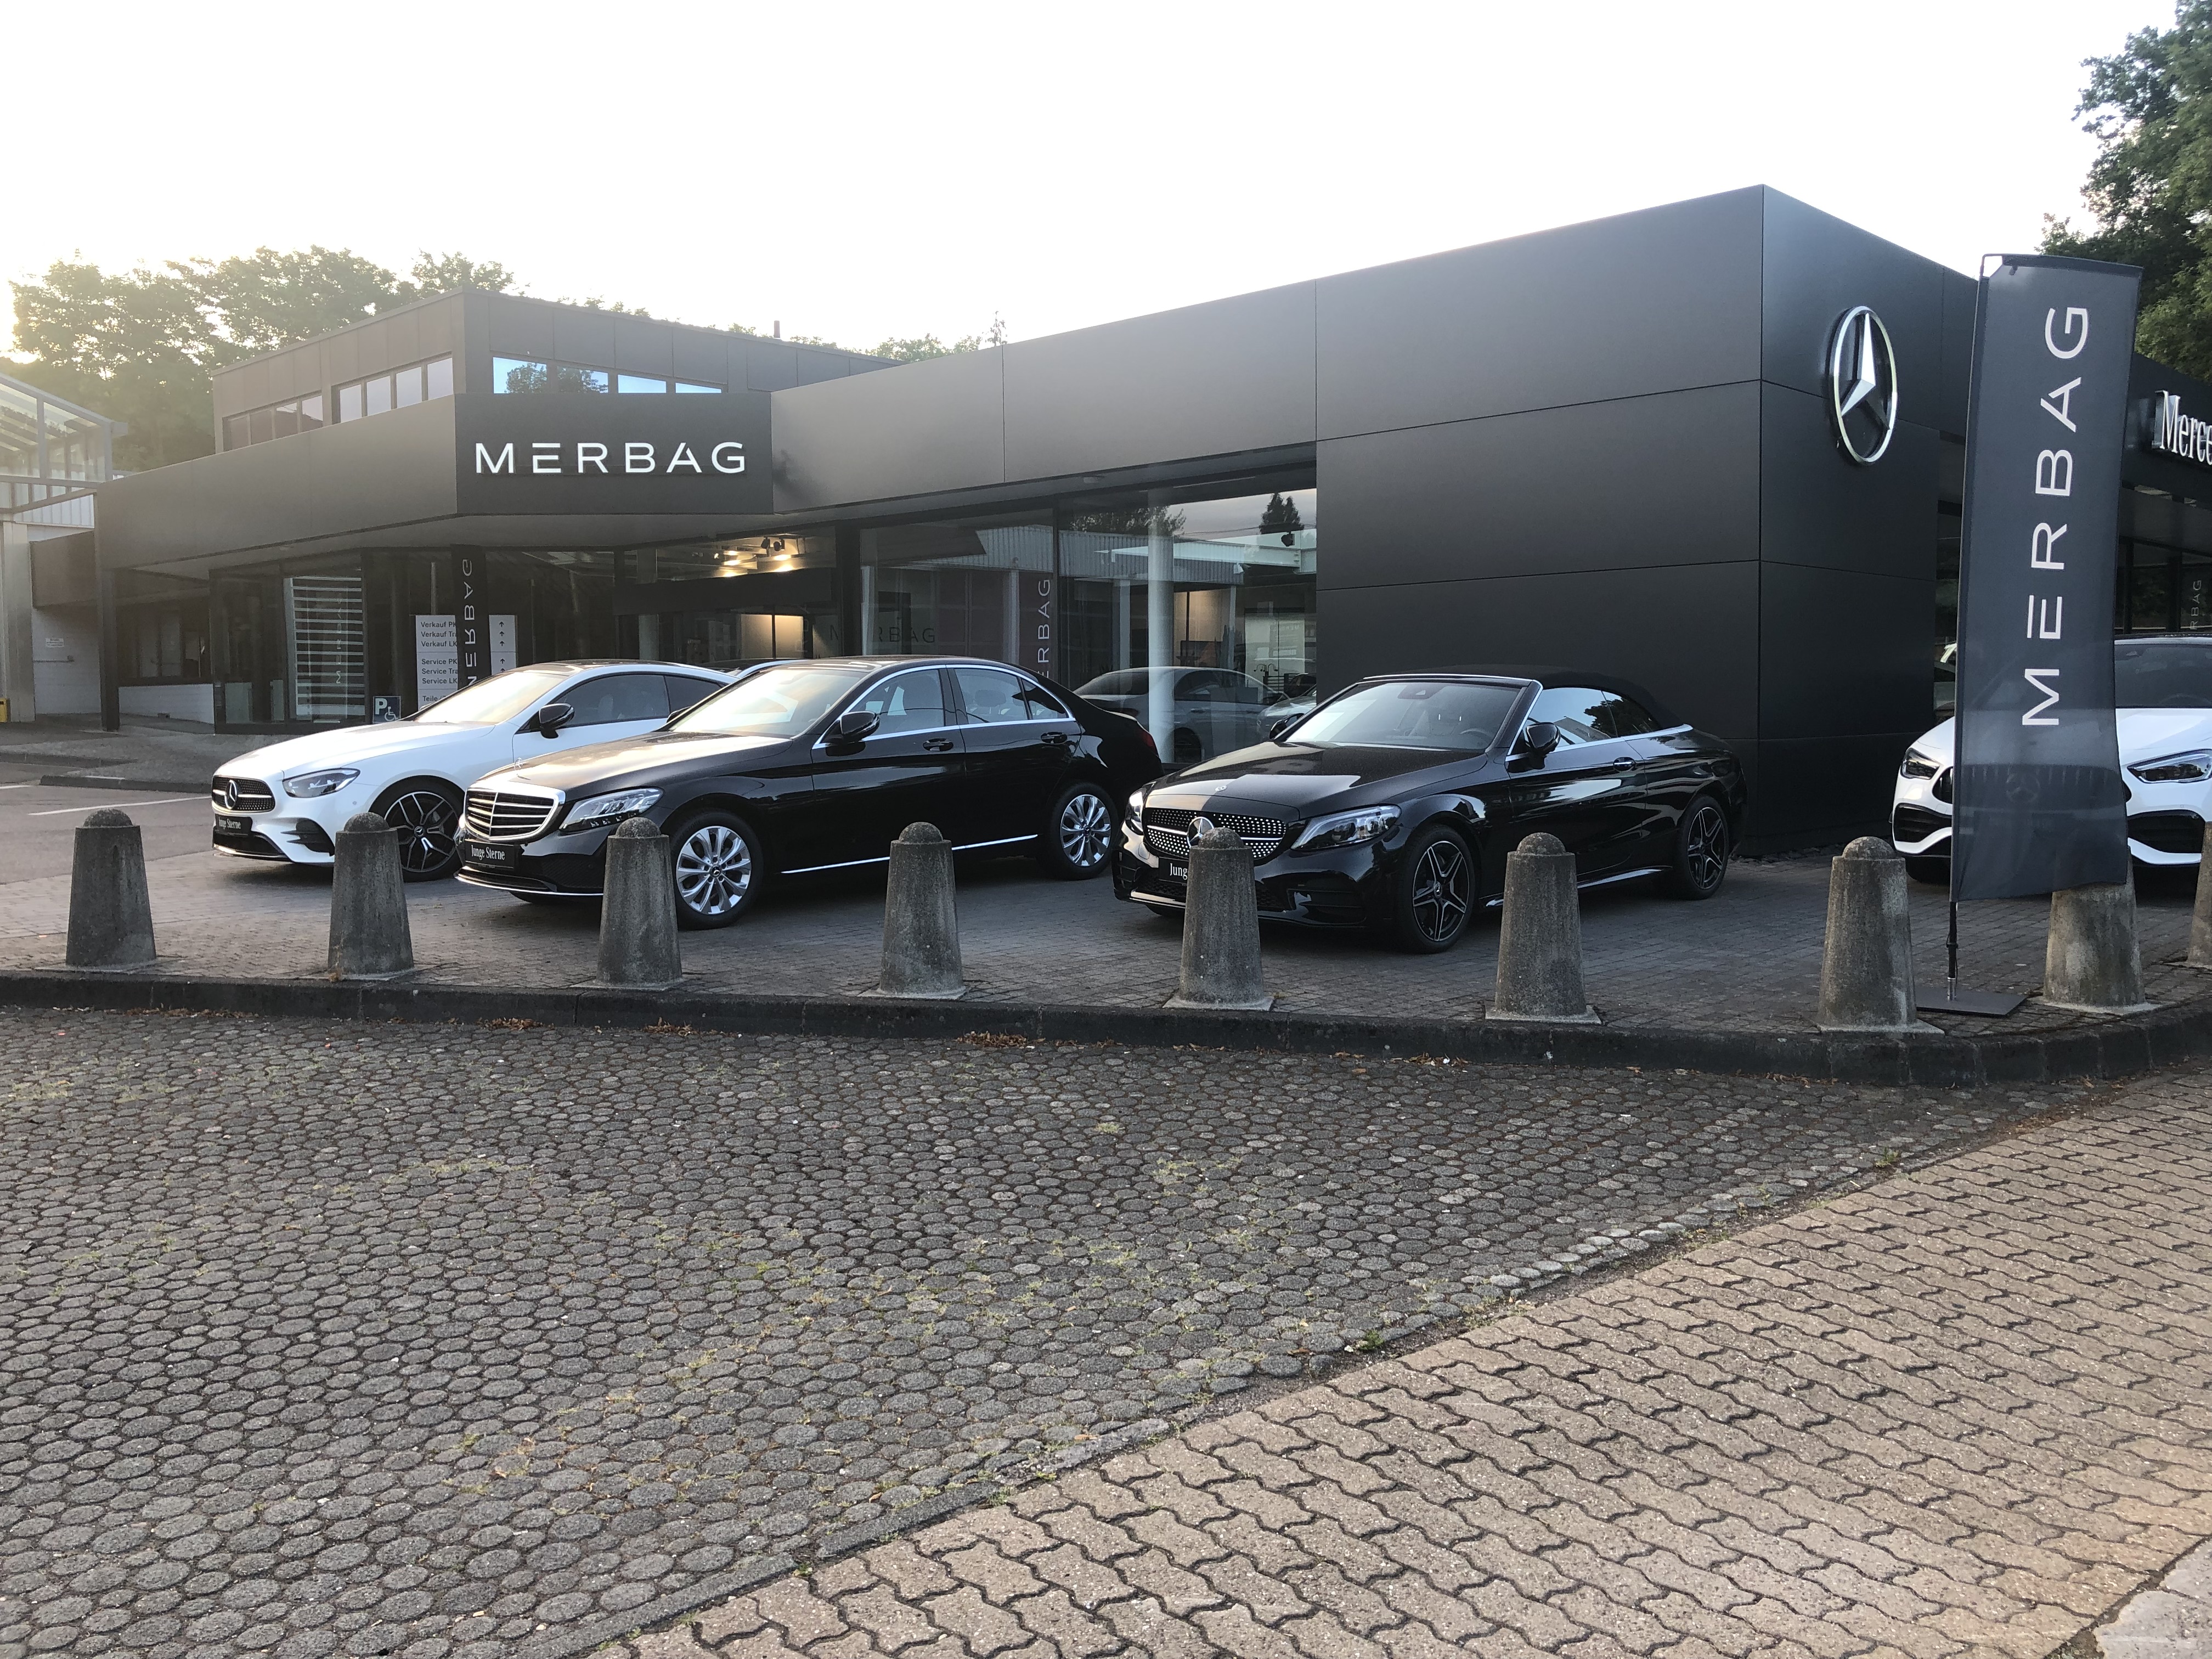 Kundenbild groß 3 Mercedes-Benz Merbag Merzig